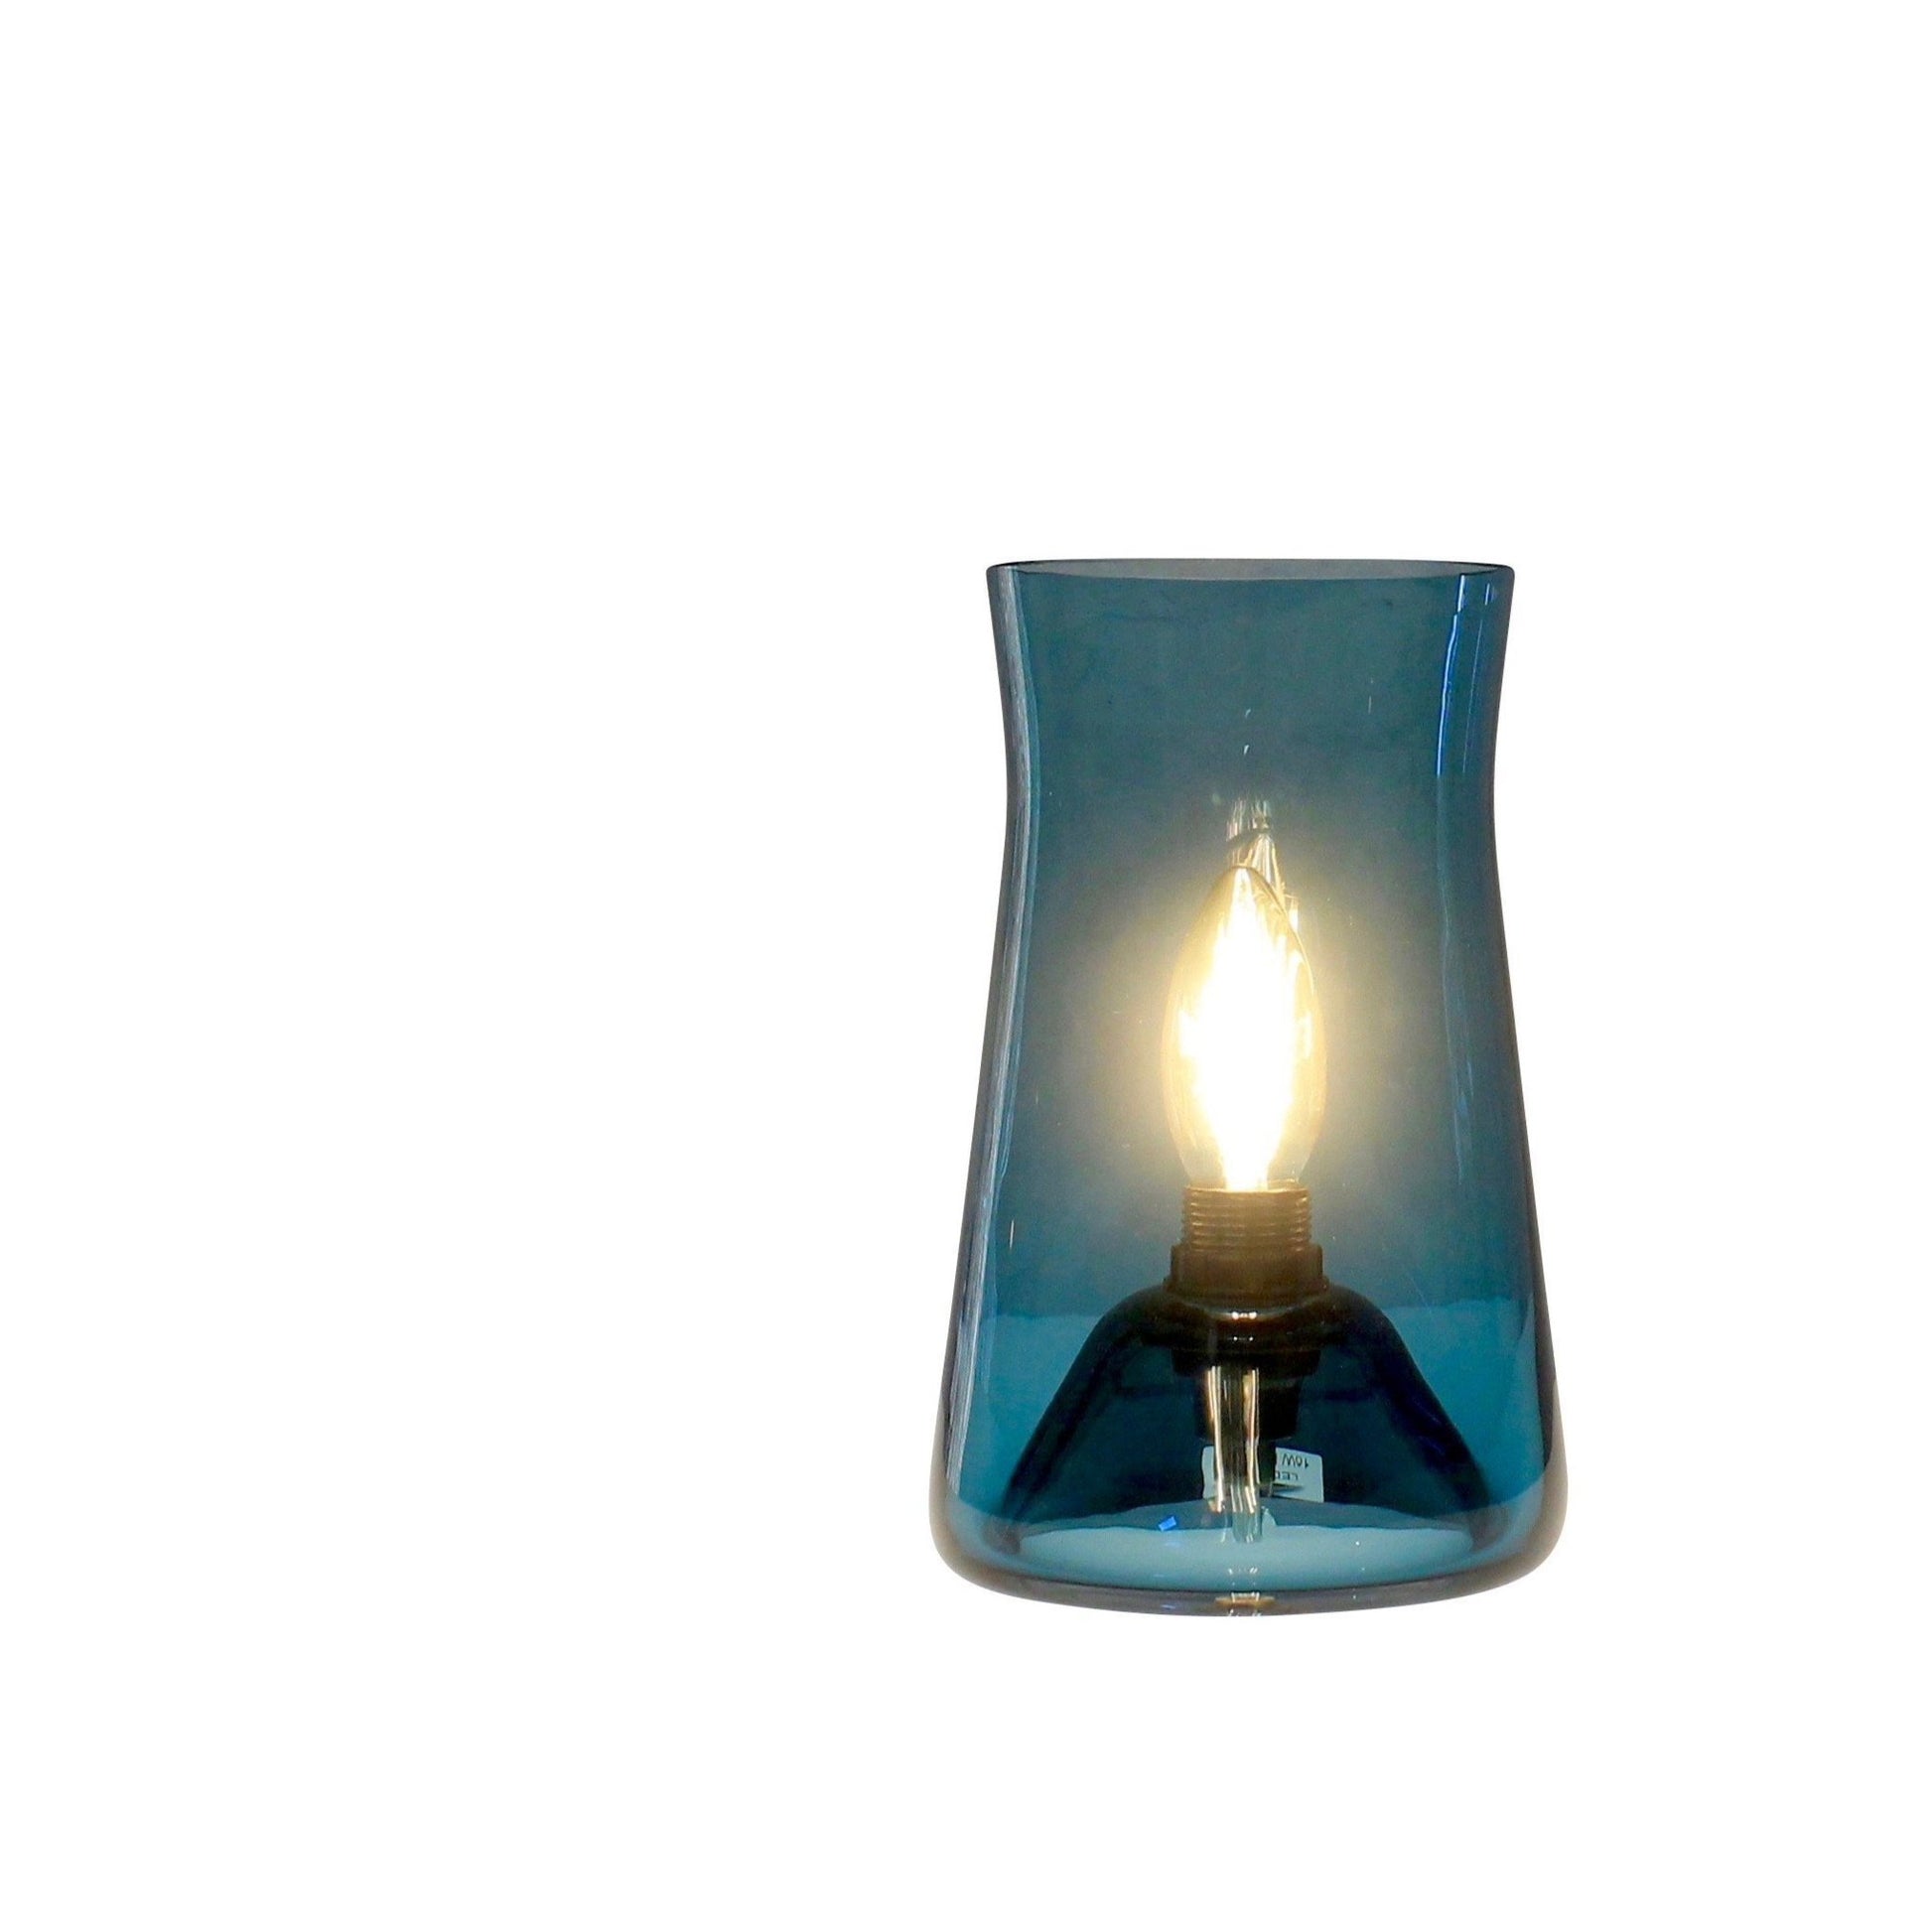 Waisted Table Lamp, Teal Blue